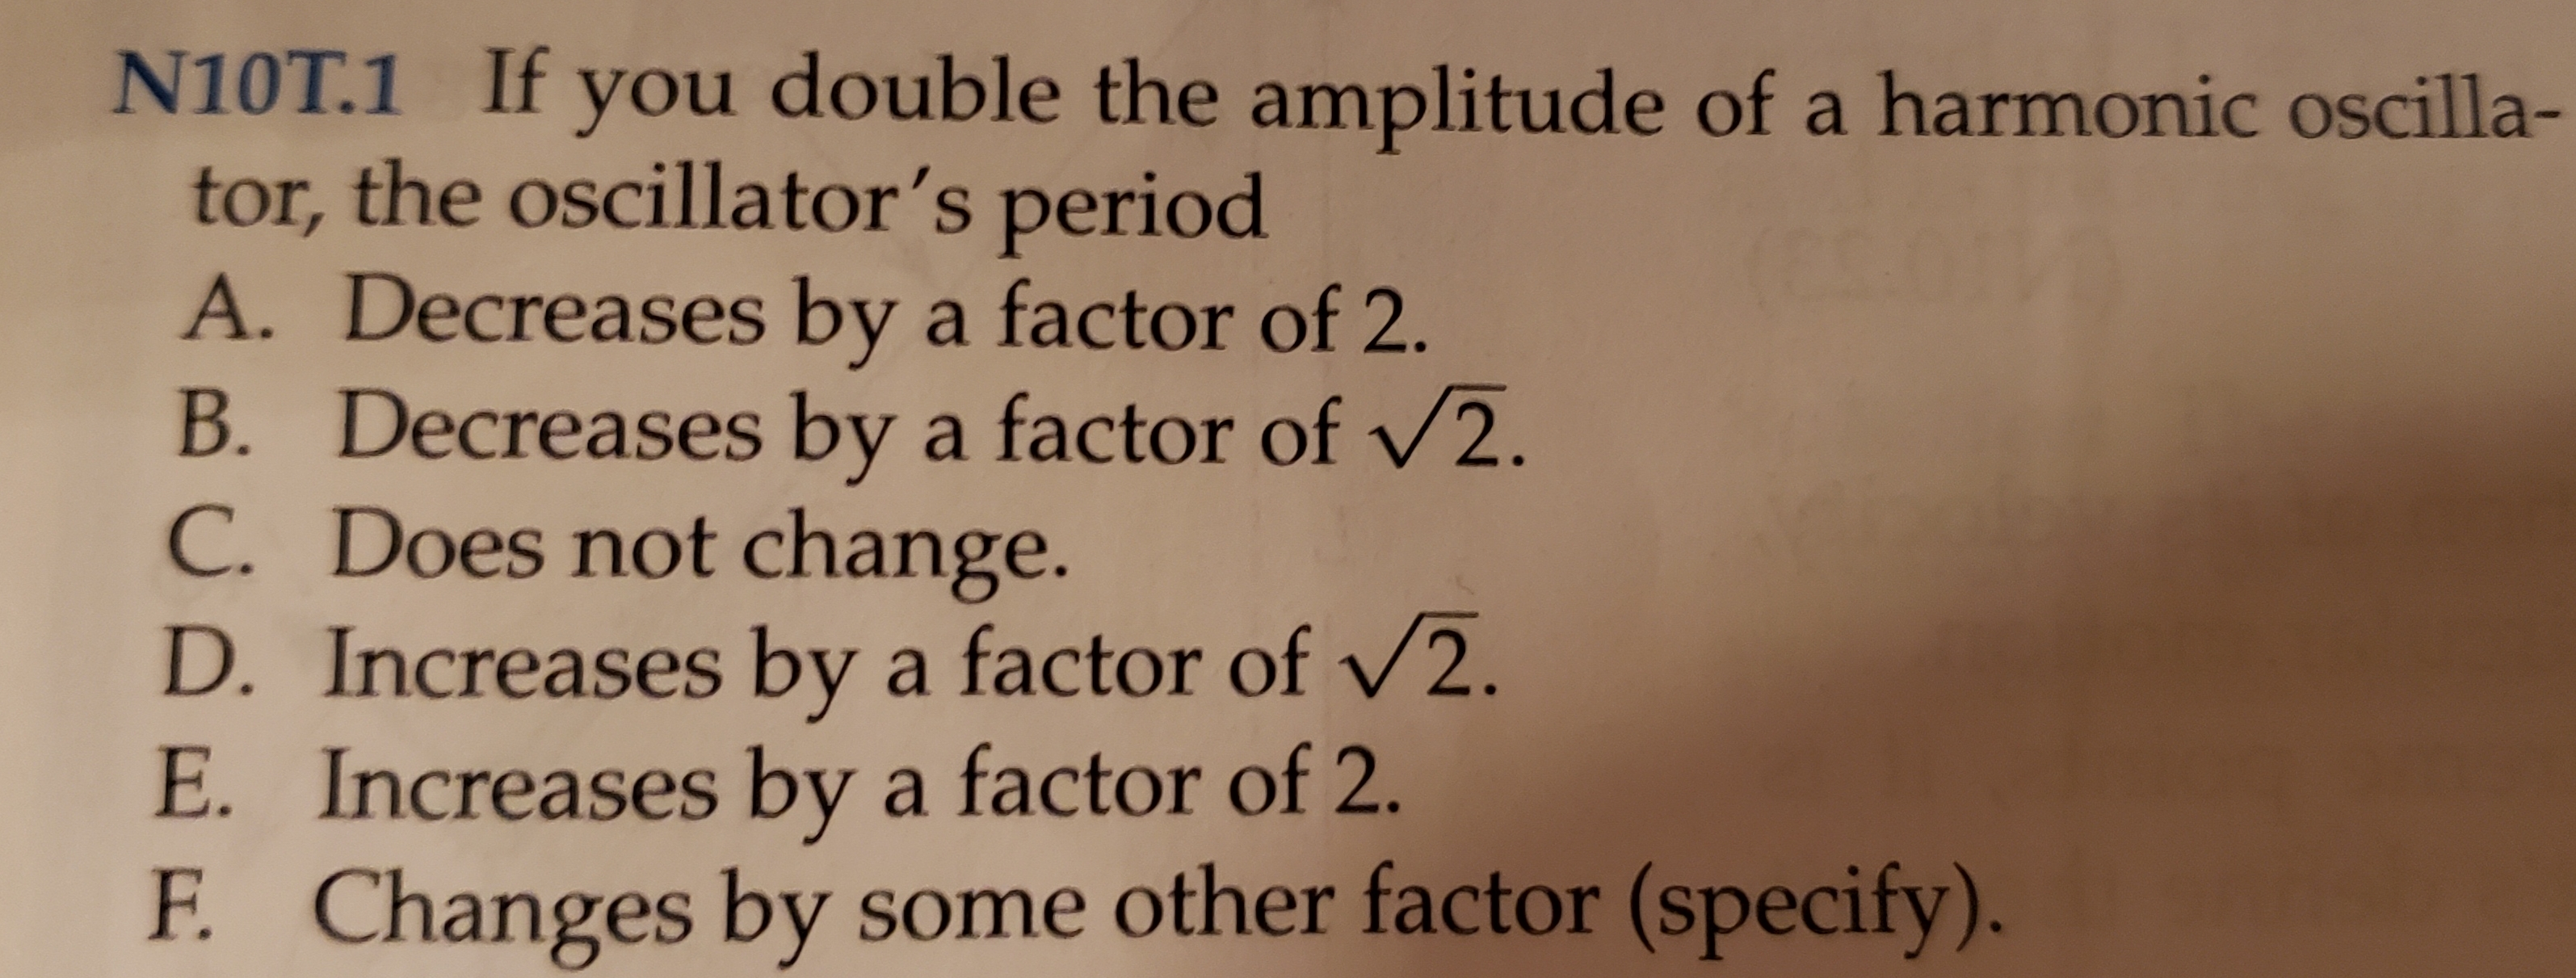 N10T.1 If
you double the amplitude of a harmonic oscilla-
tor, the oscillator's period
A. Decreases by a factor of 2.
B. Decreases by a factor of /2.
C. Does not change.
D.Increases by a factor of /2.
E. Increases by a factor of 2.
Changes by some other factor (specify).
F.
